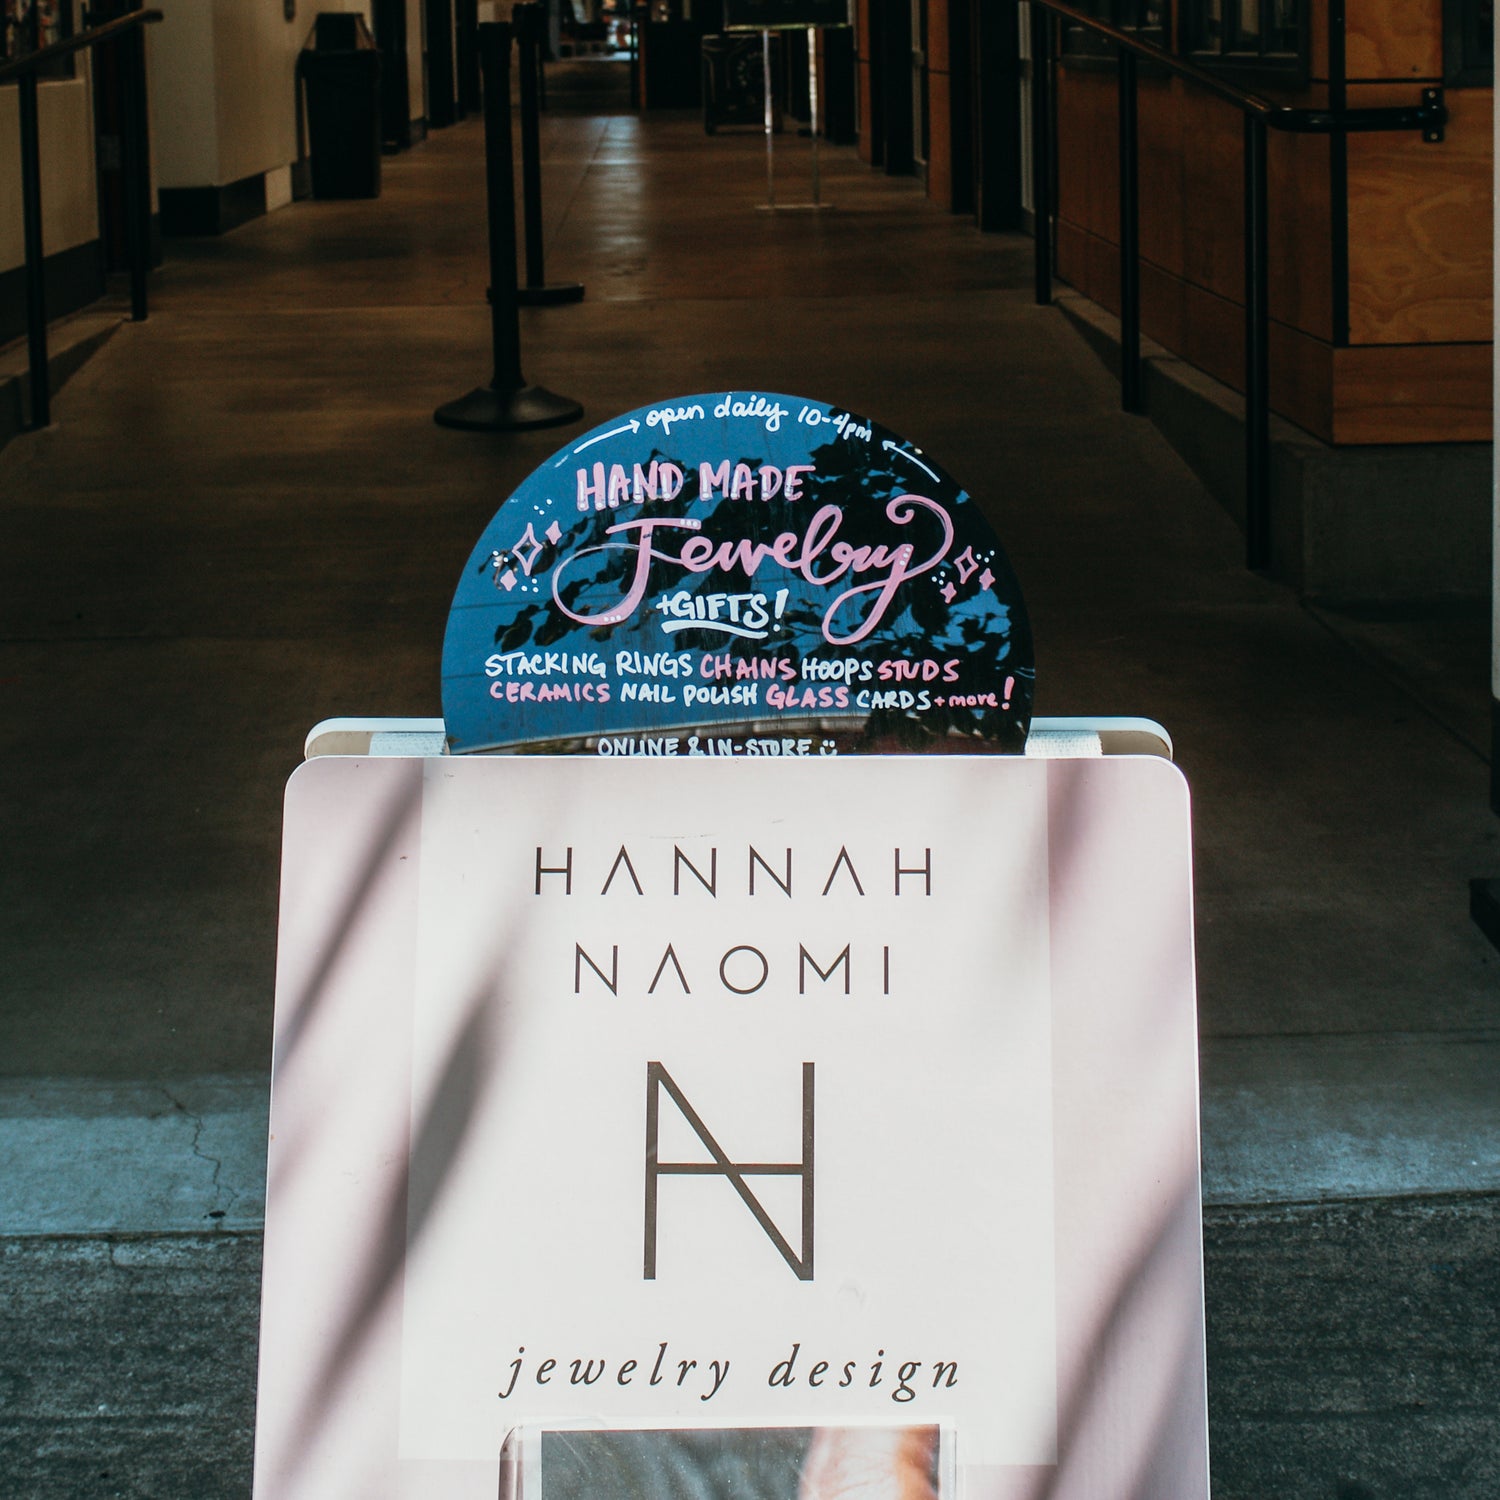 Hannah Naomi Retail Store outdoor sign